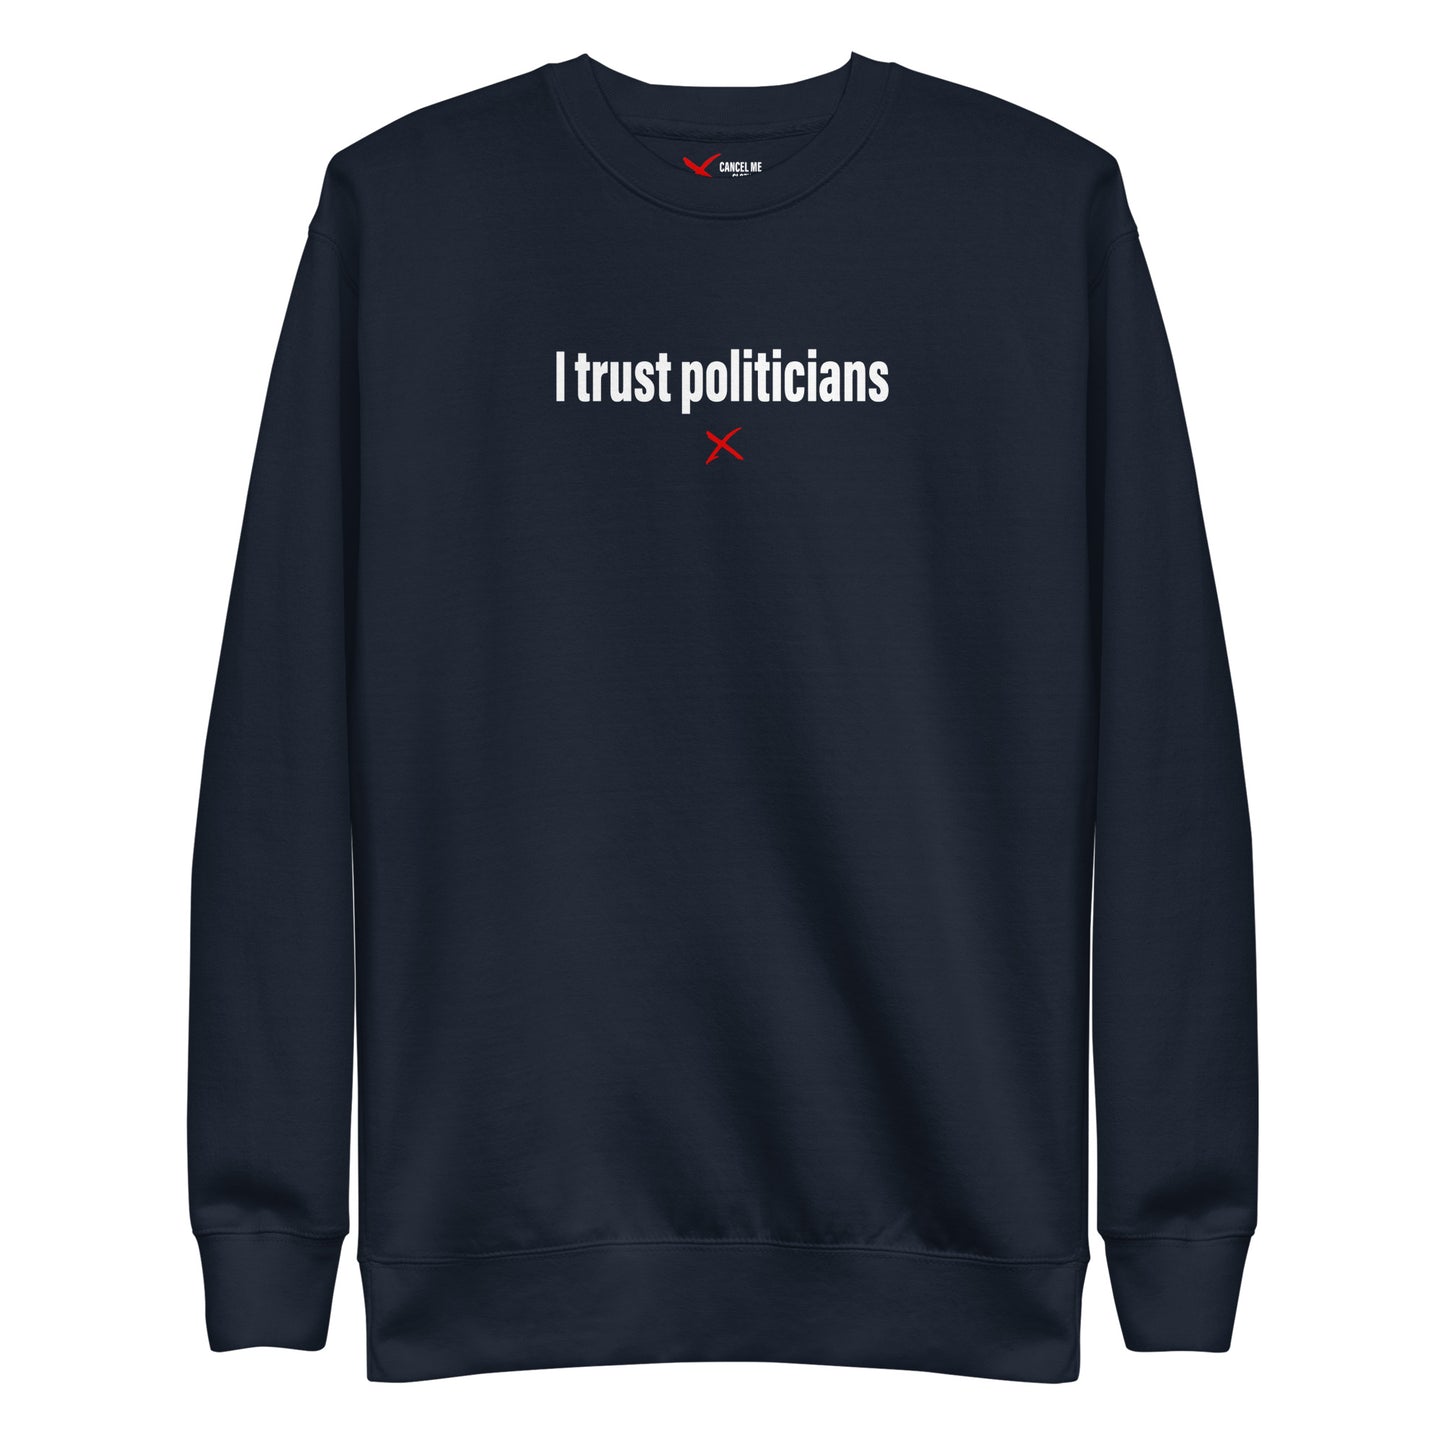 I trust politicians - Sweatshirt